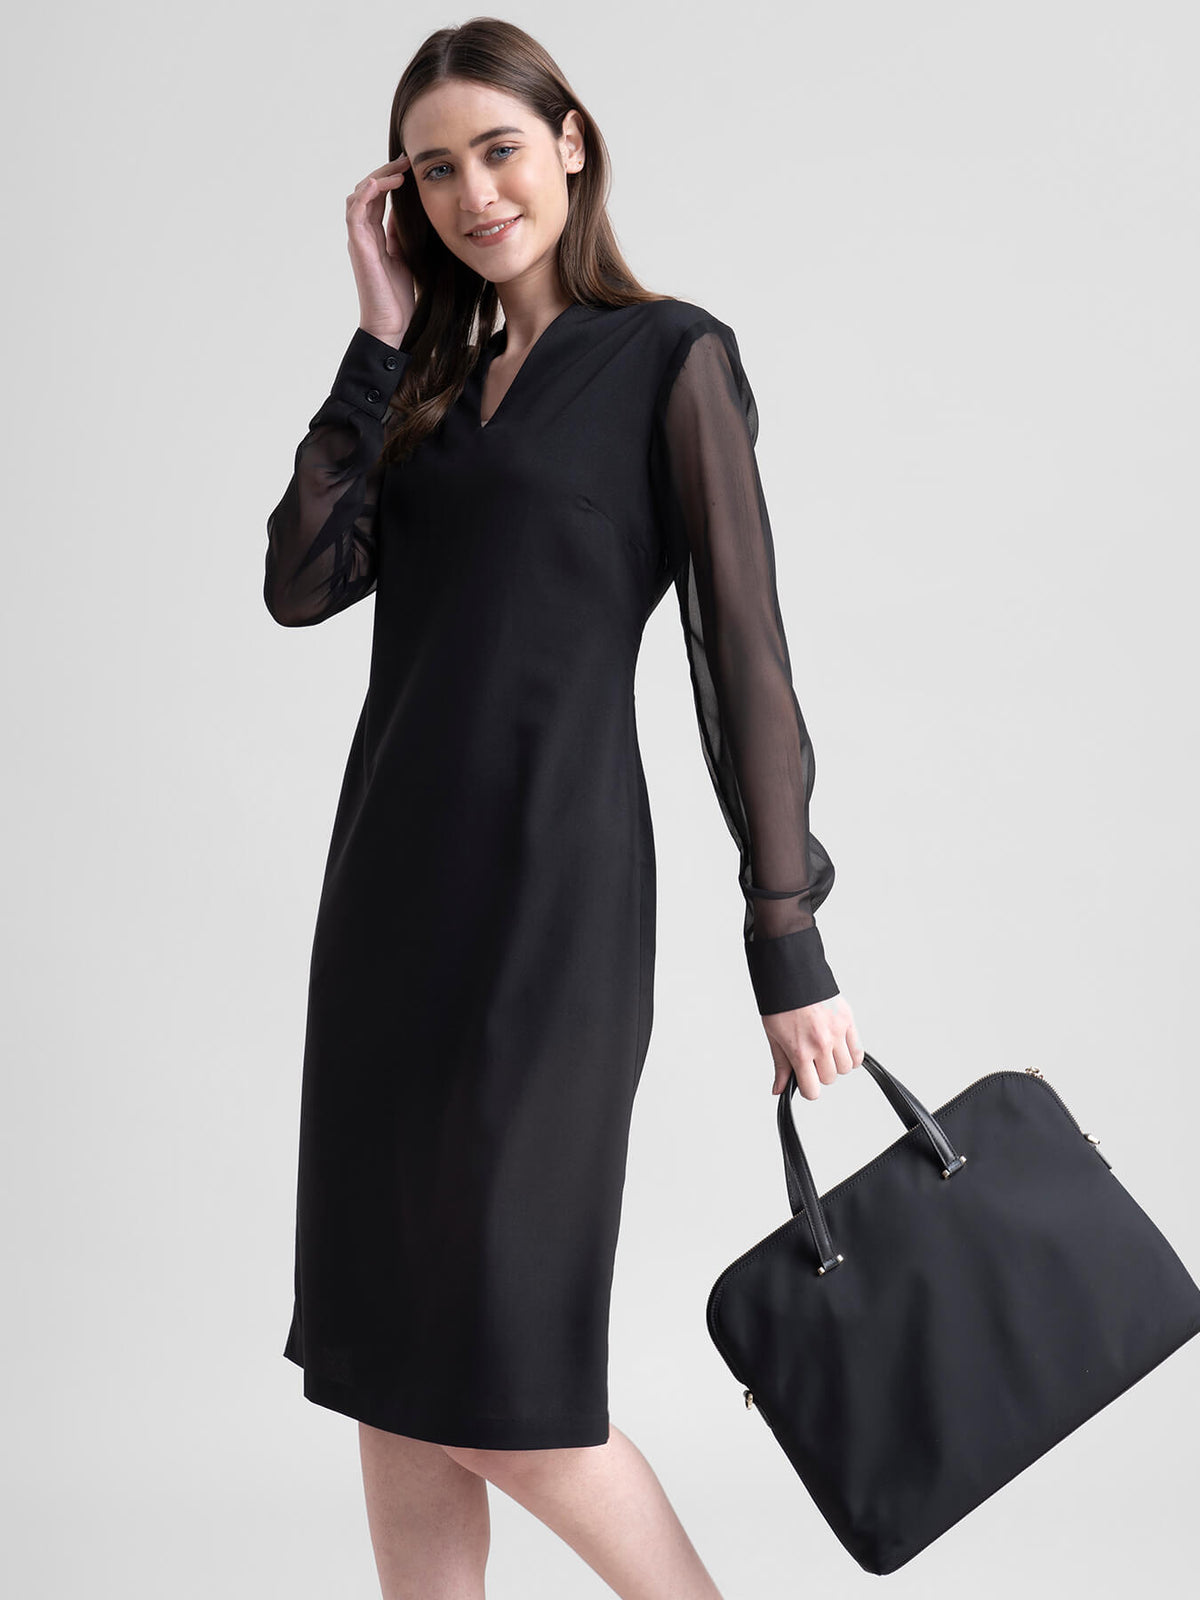 Formal Dresses For Women – Buy Ladies Office Wear Dresses Online in India